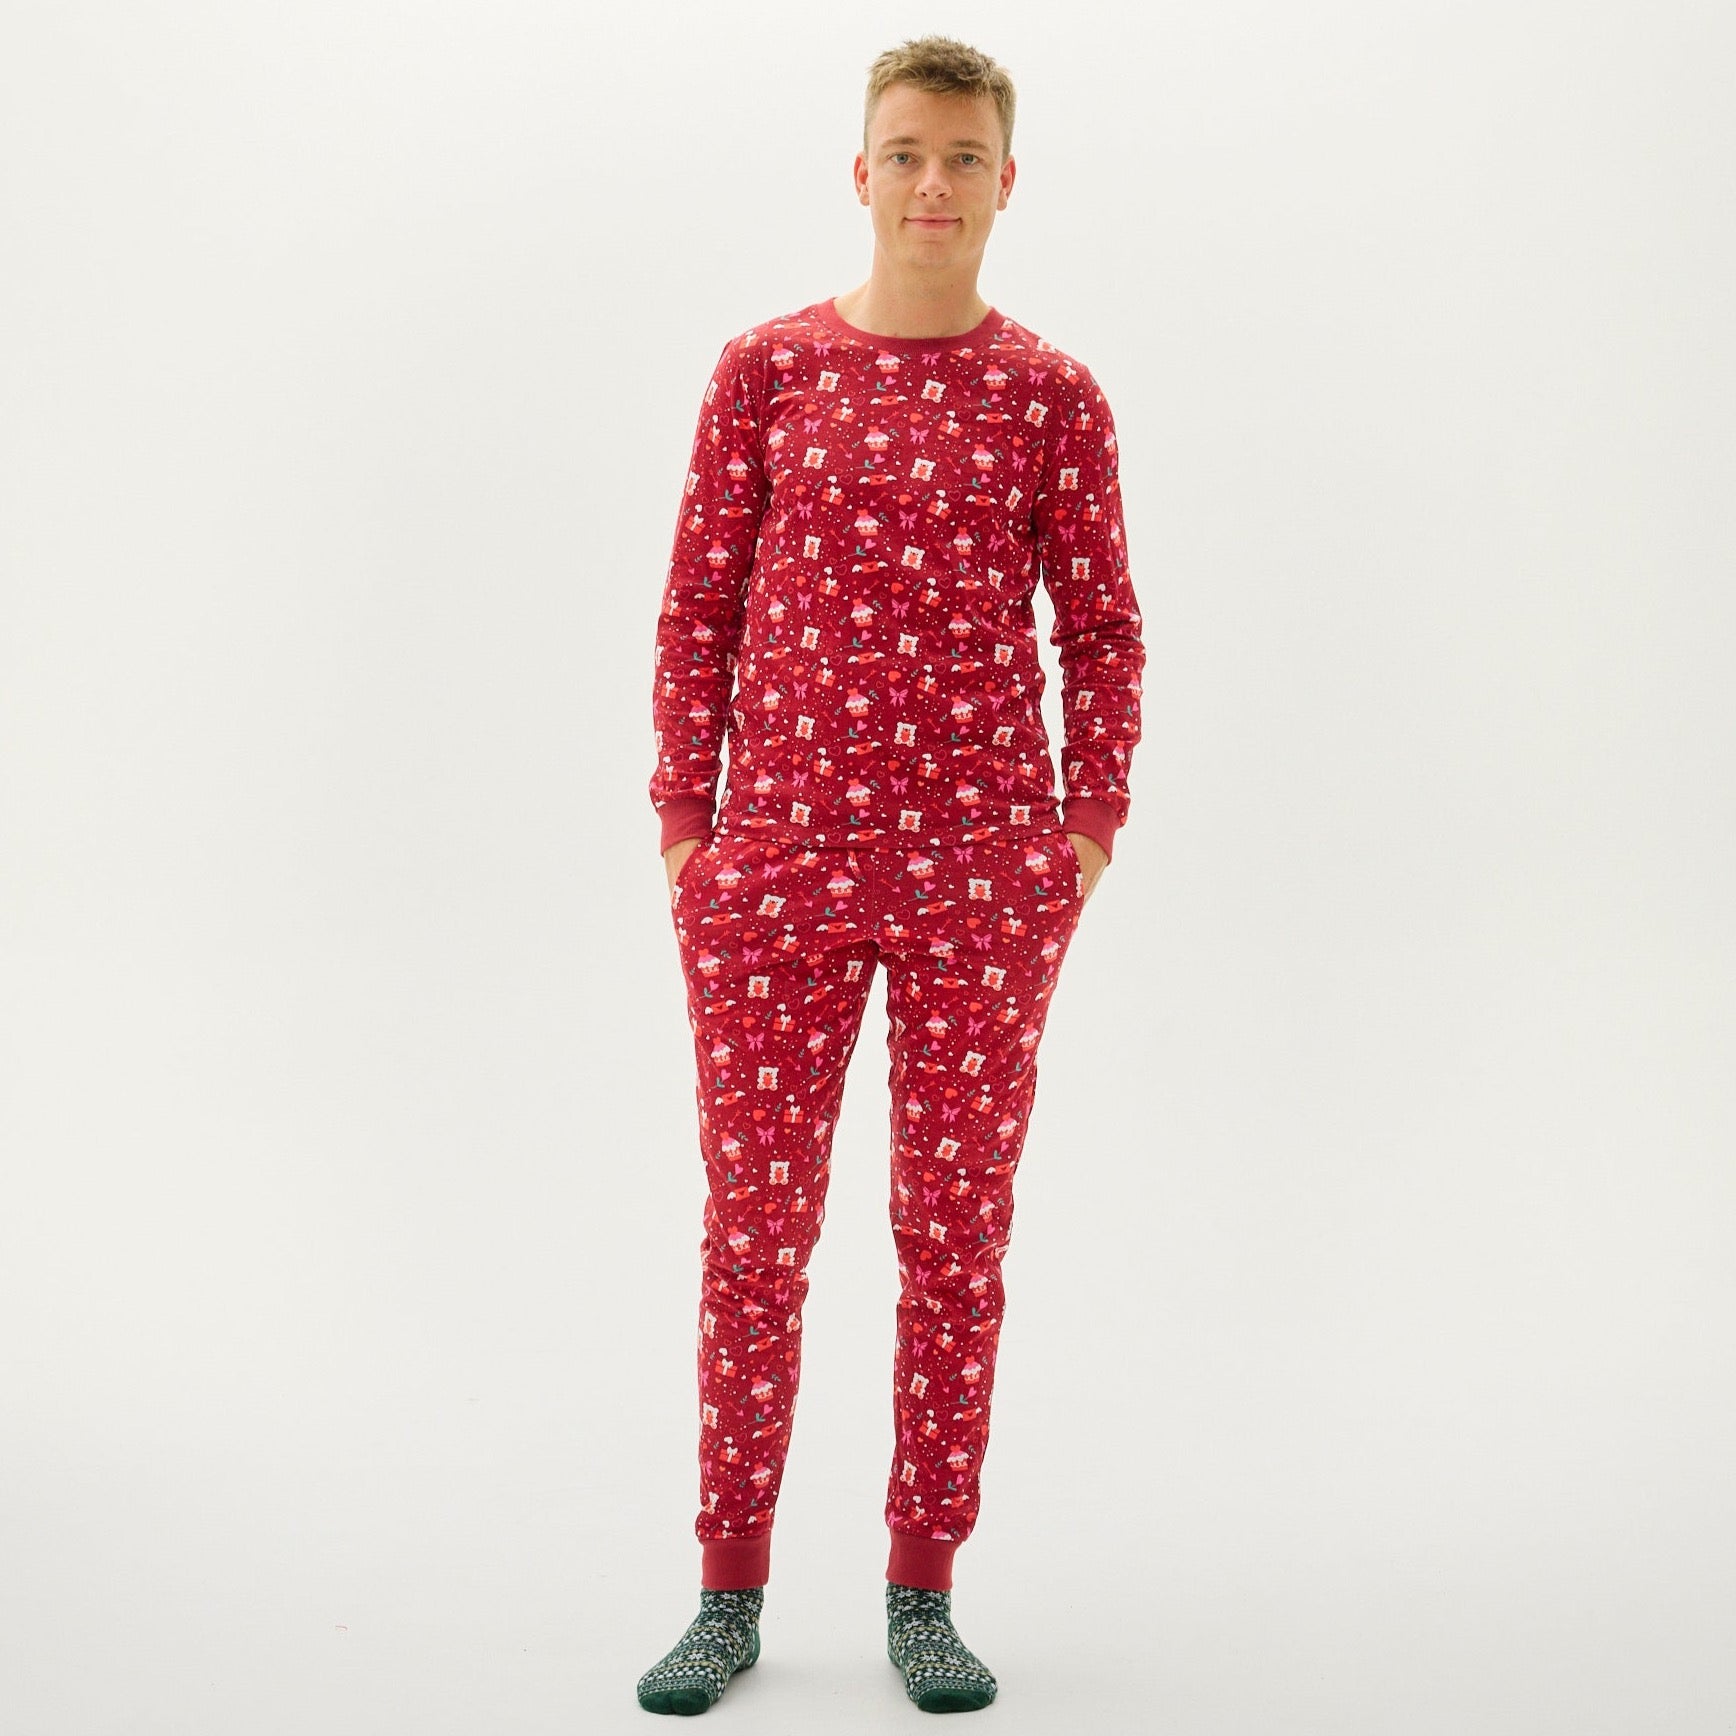 Valentines pyjamas - Herr